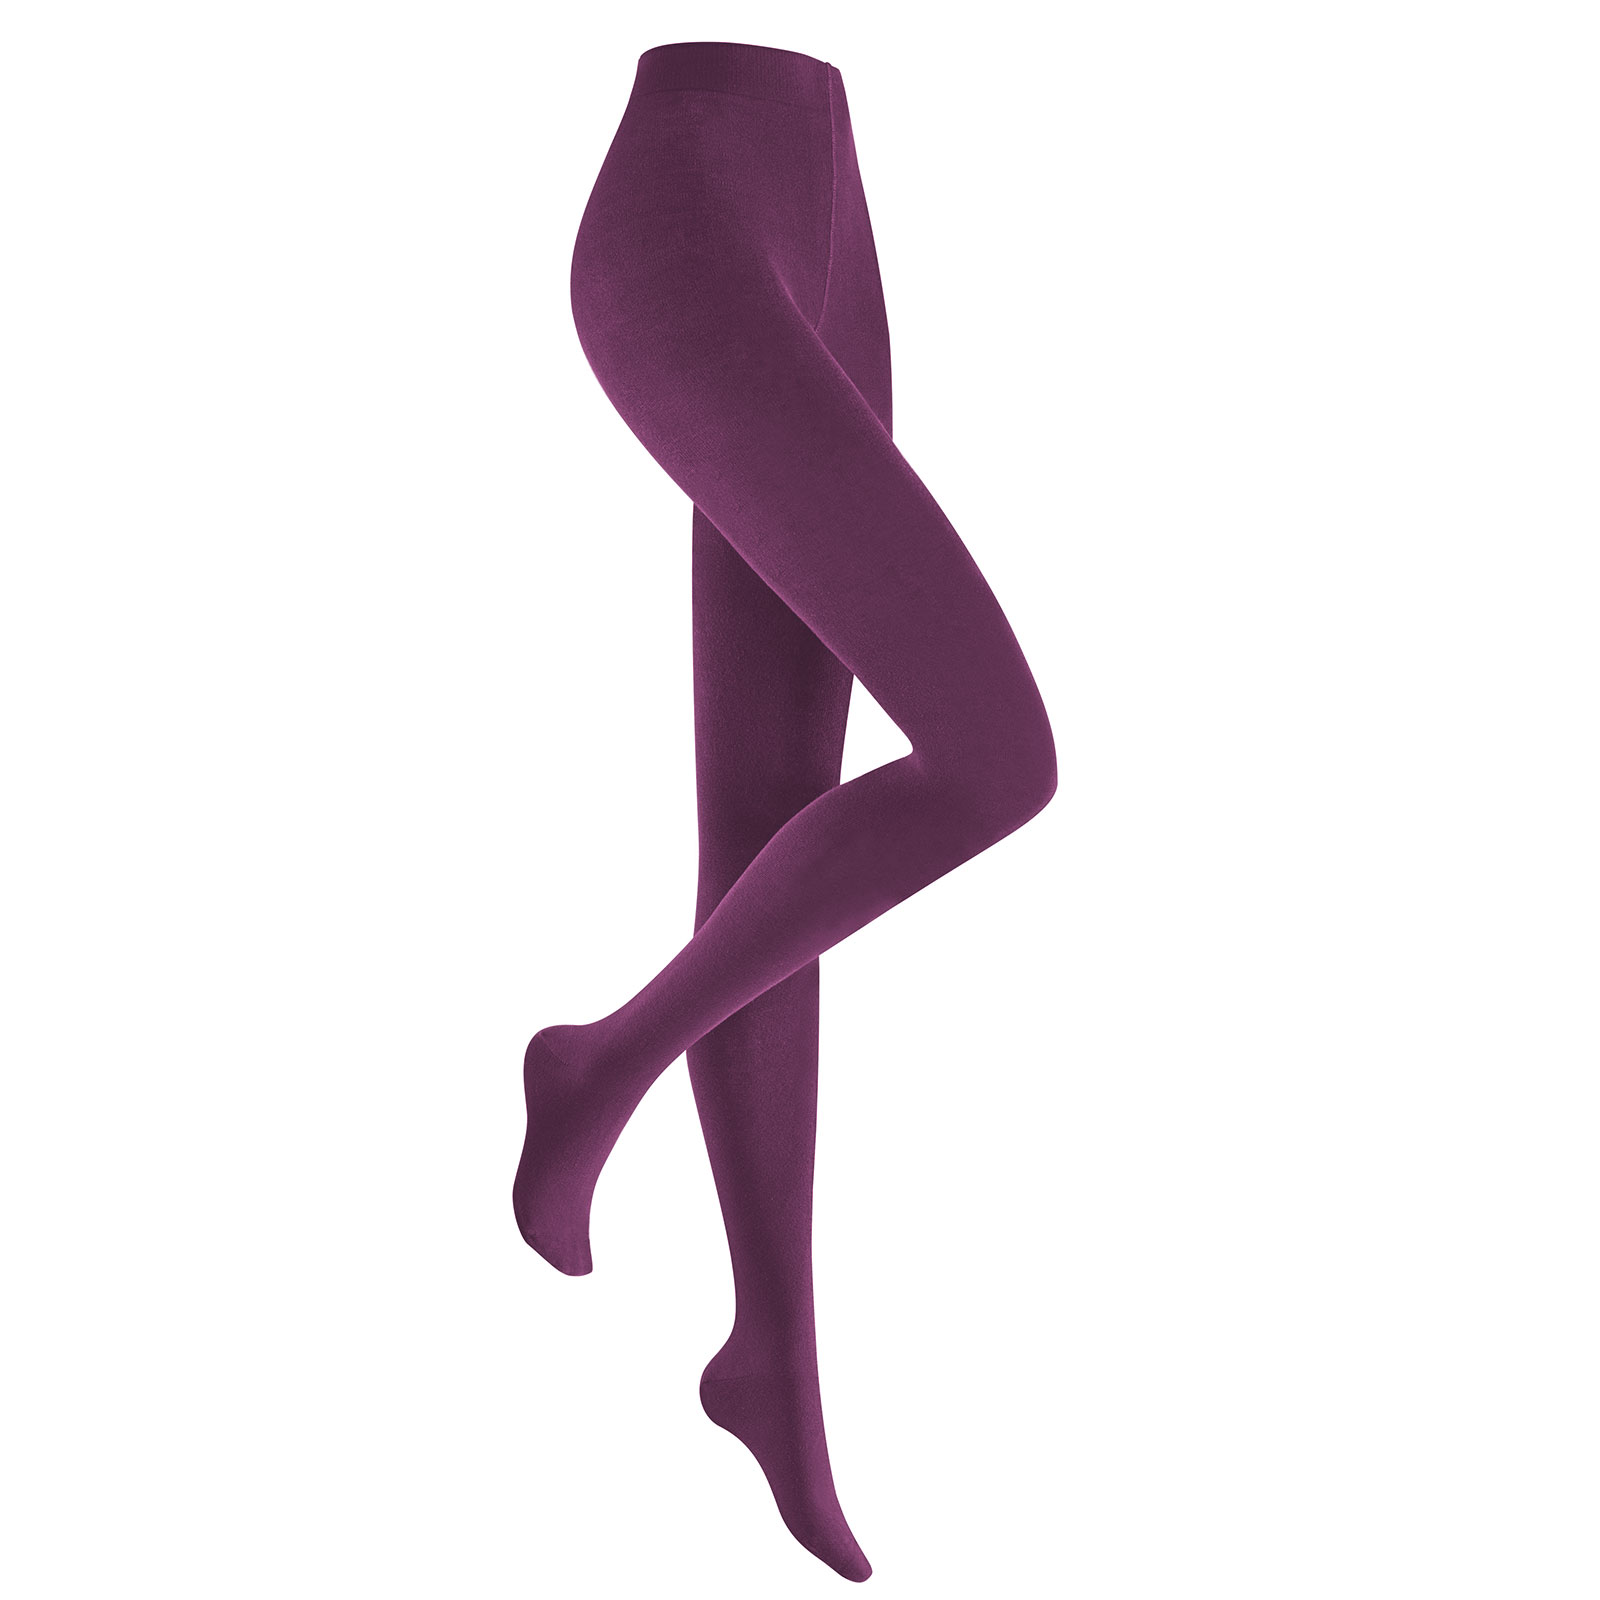 HUDSON Damen RELAX FINE  -  40/42 - Blickdichte Strumpfhose / Strickstrumpfhose mit hohem Baumwollanteil - Sweet lilac (Pink/Violett)